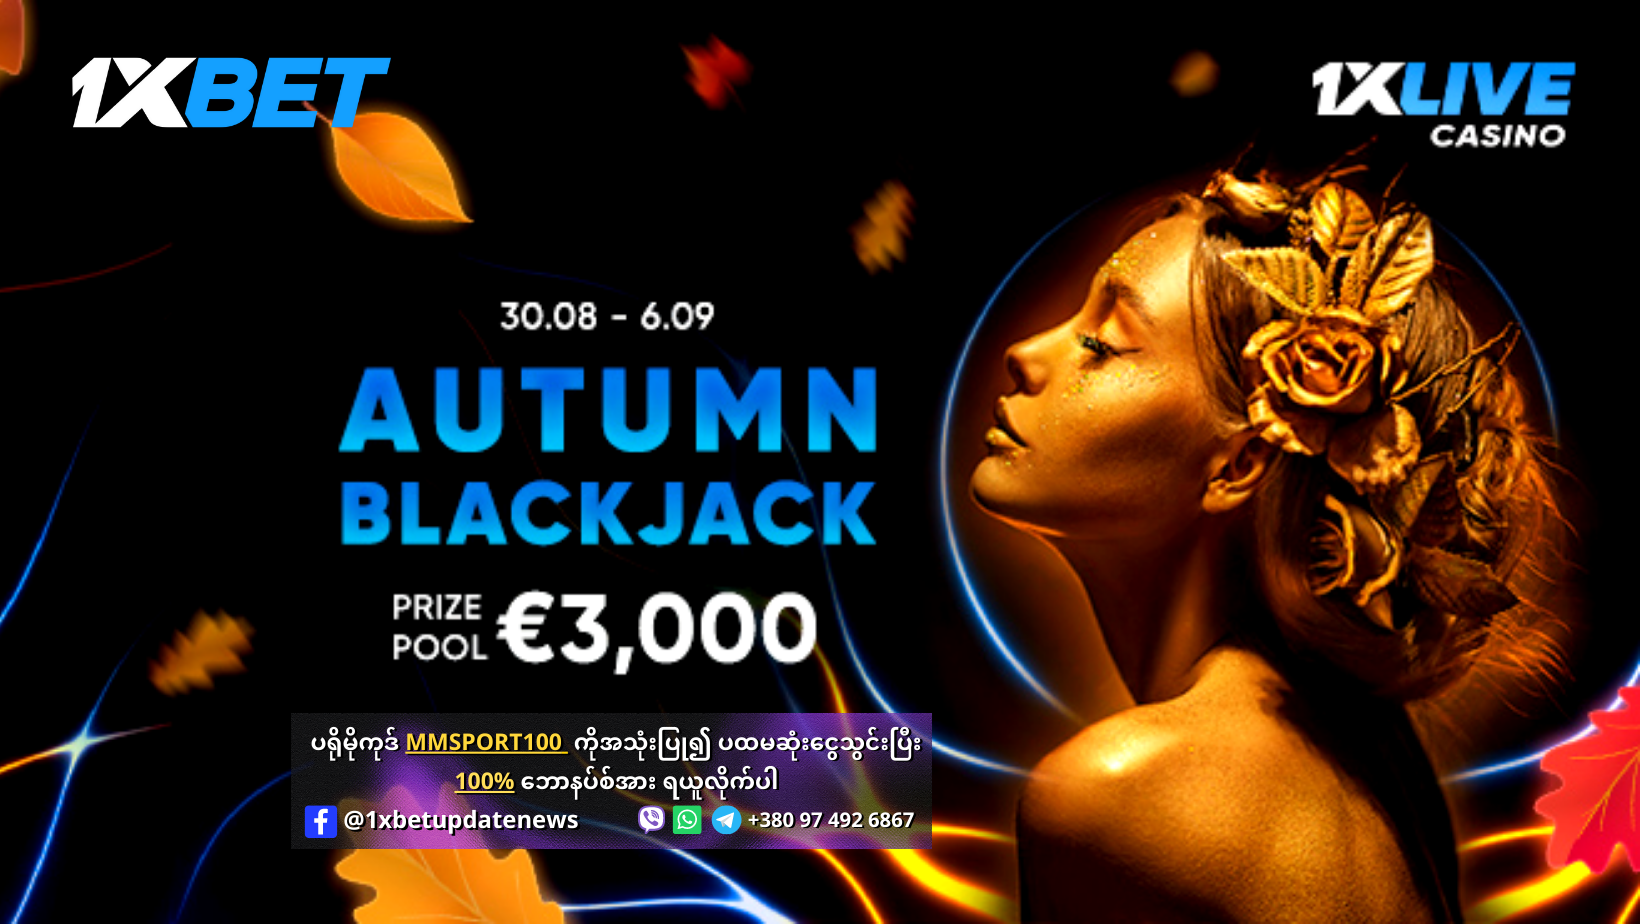 Autumn Blackjack Promotion